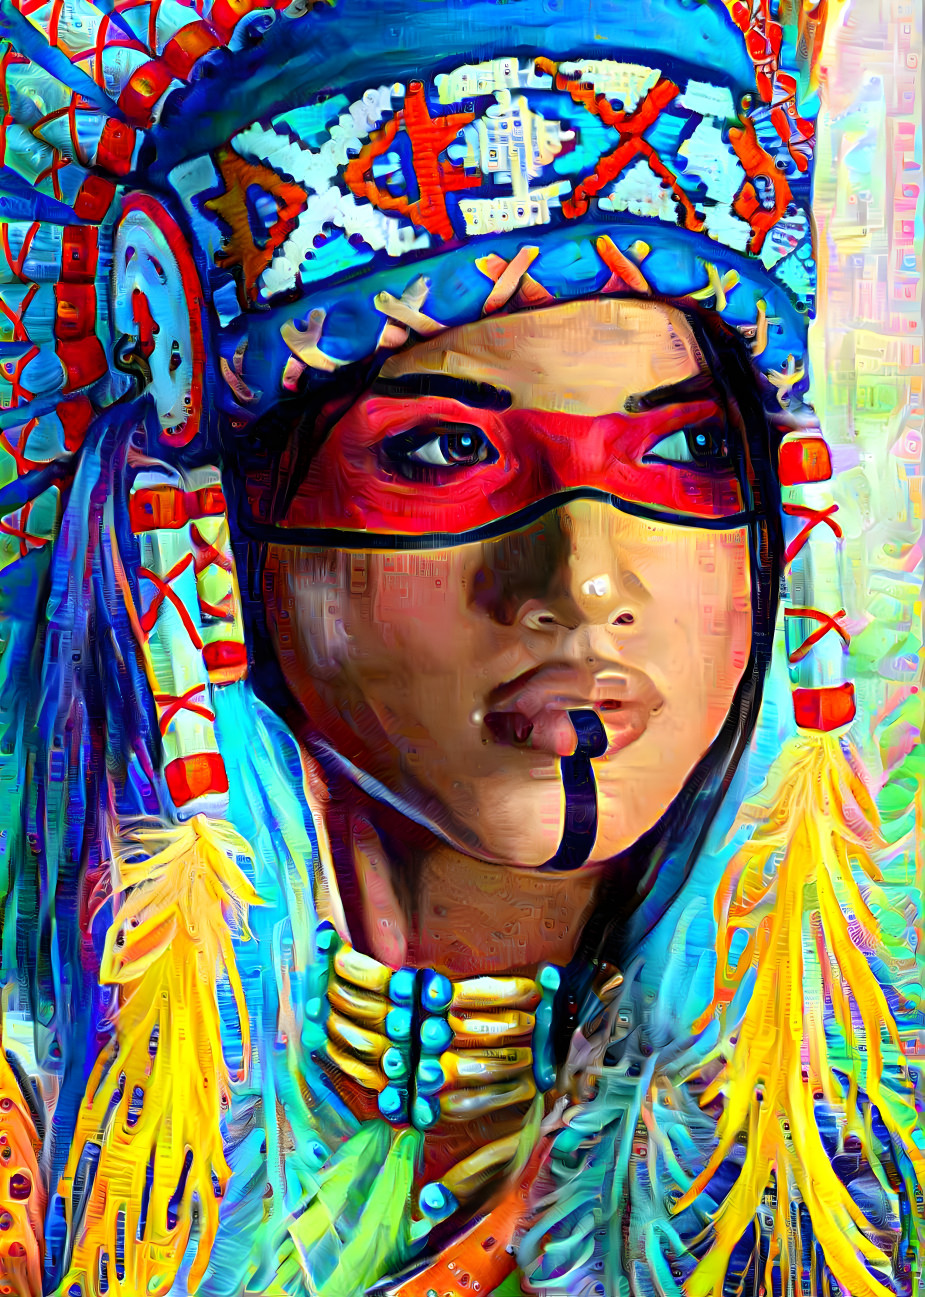 Cherokee Woman